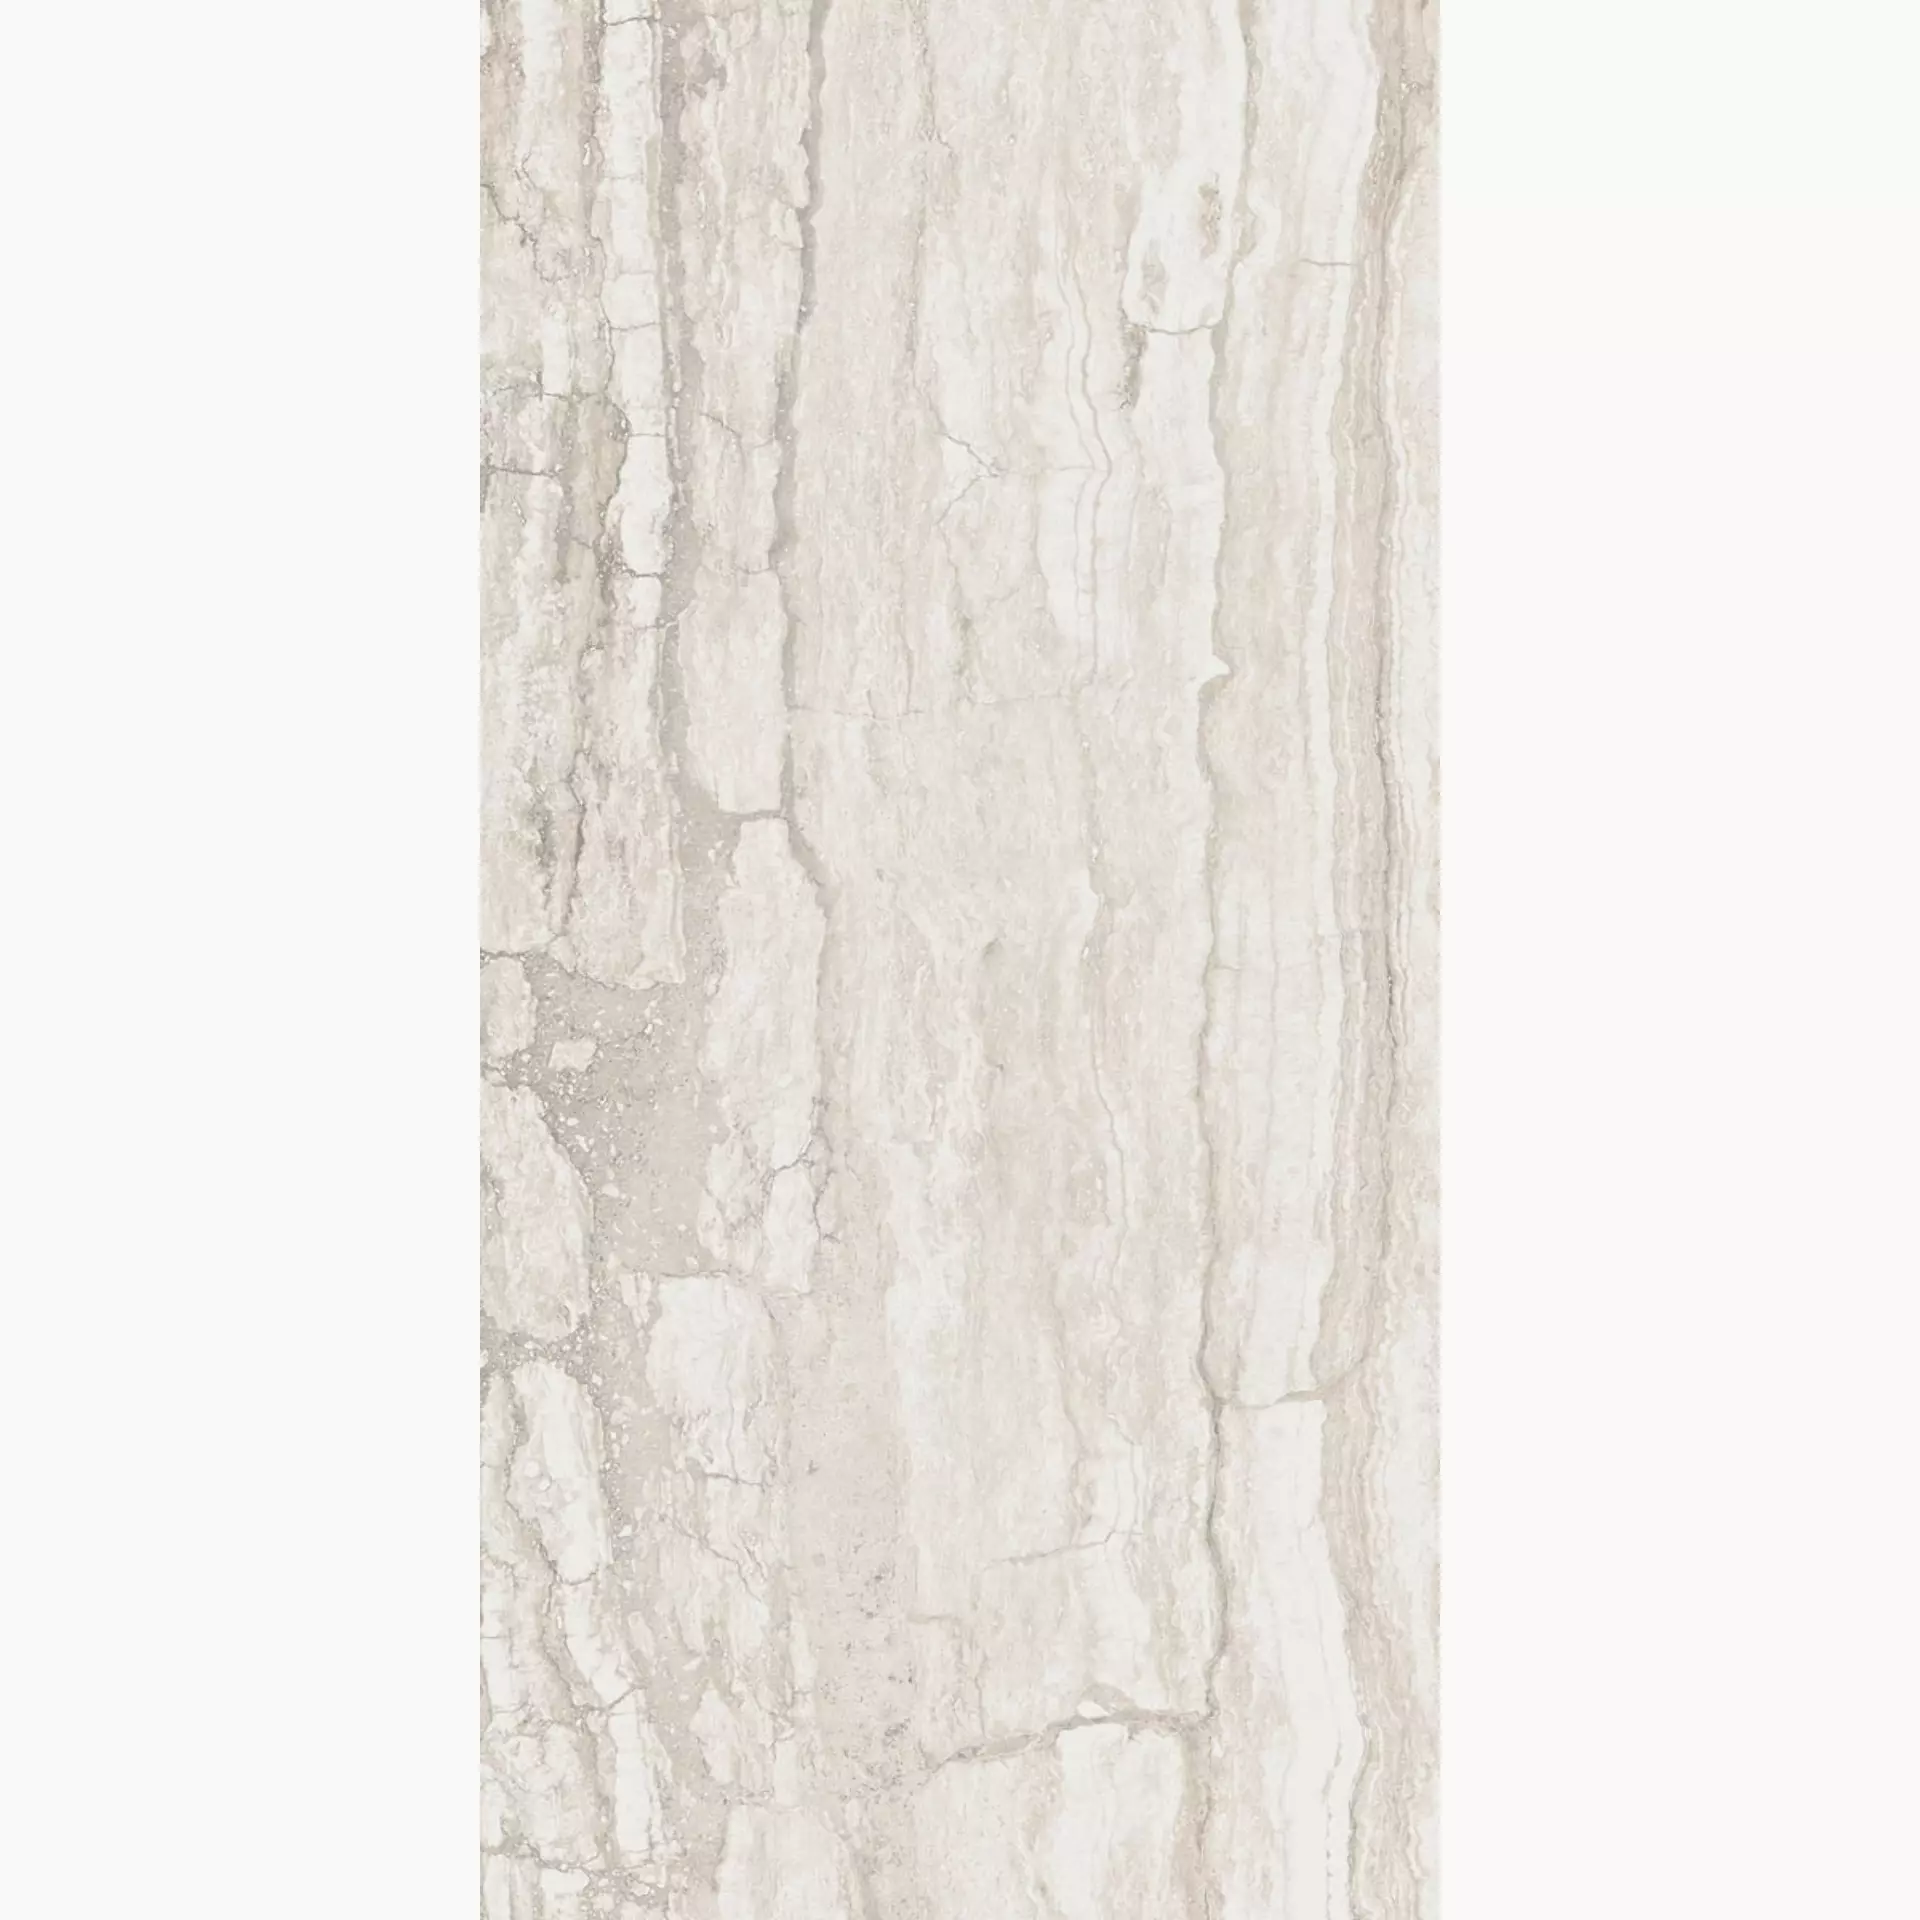 La Faenza Bianco White Natural Flat Matt 166248 90x180cm rectified 10mm - TRA ON 9018 RM